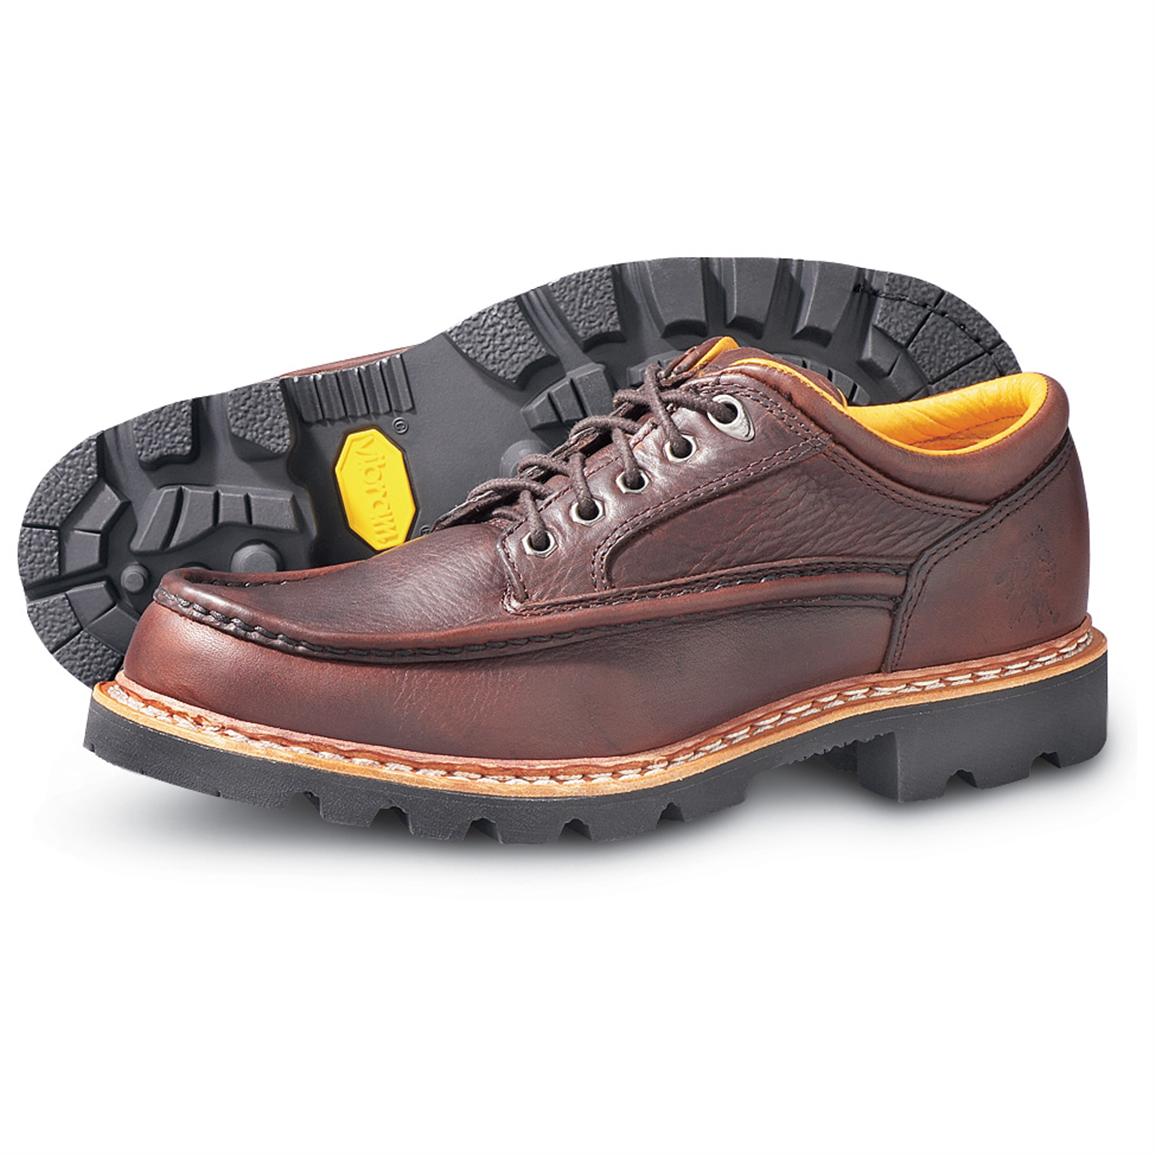 chippewa leather moc toe oxford shoes